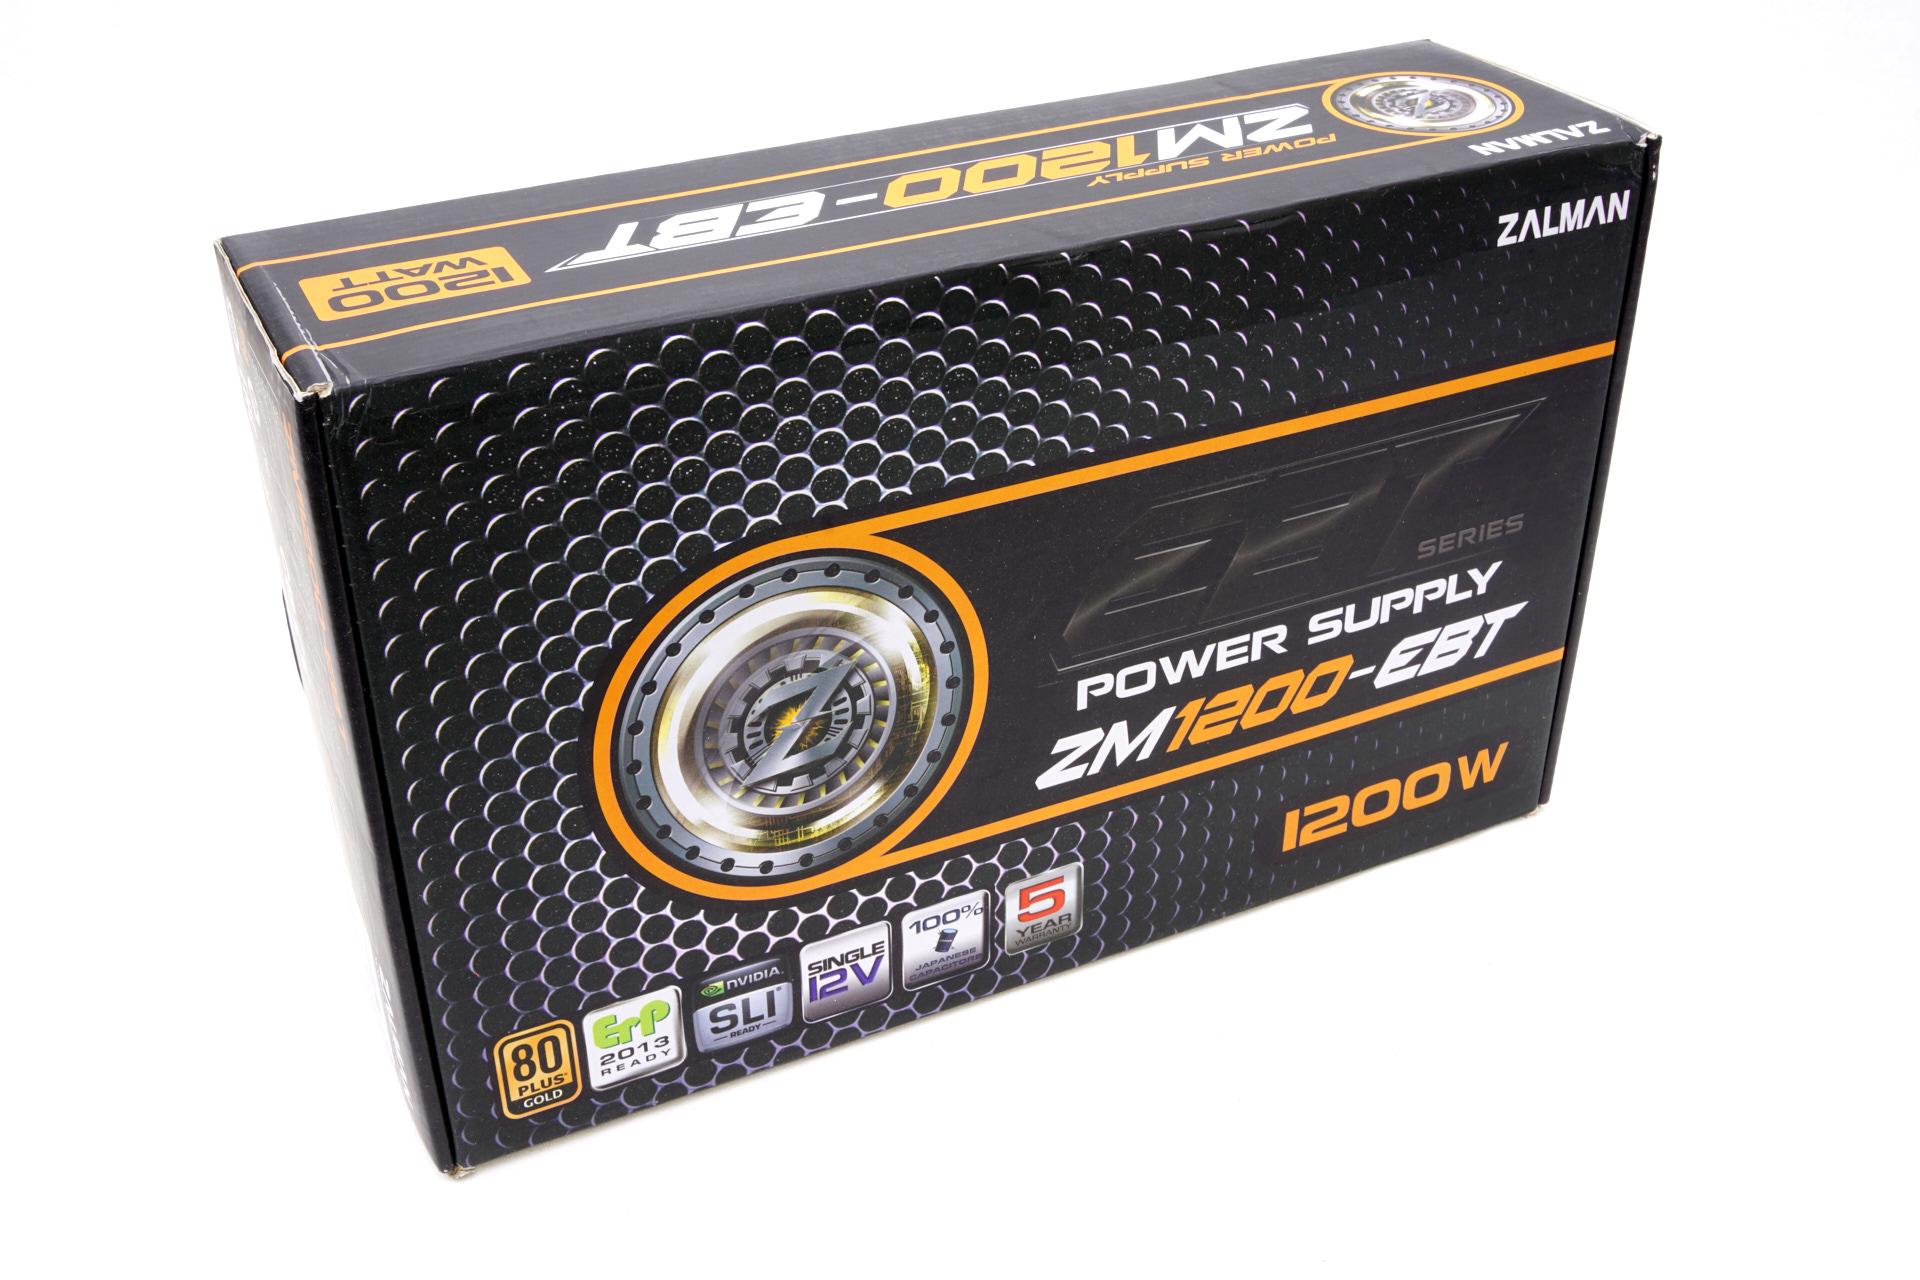 The Zalman ZM1200-EBT 1200W Power Supply Review